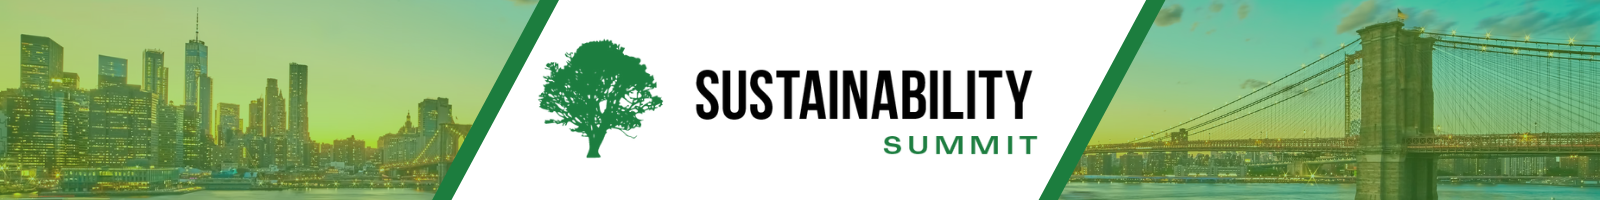 Sustainability Summit Banner